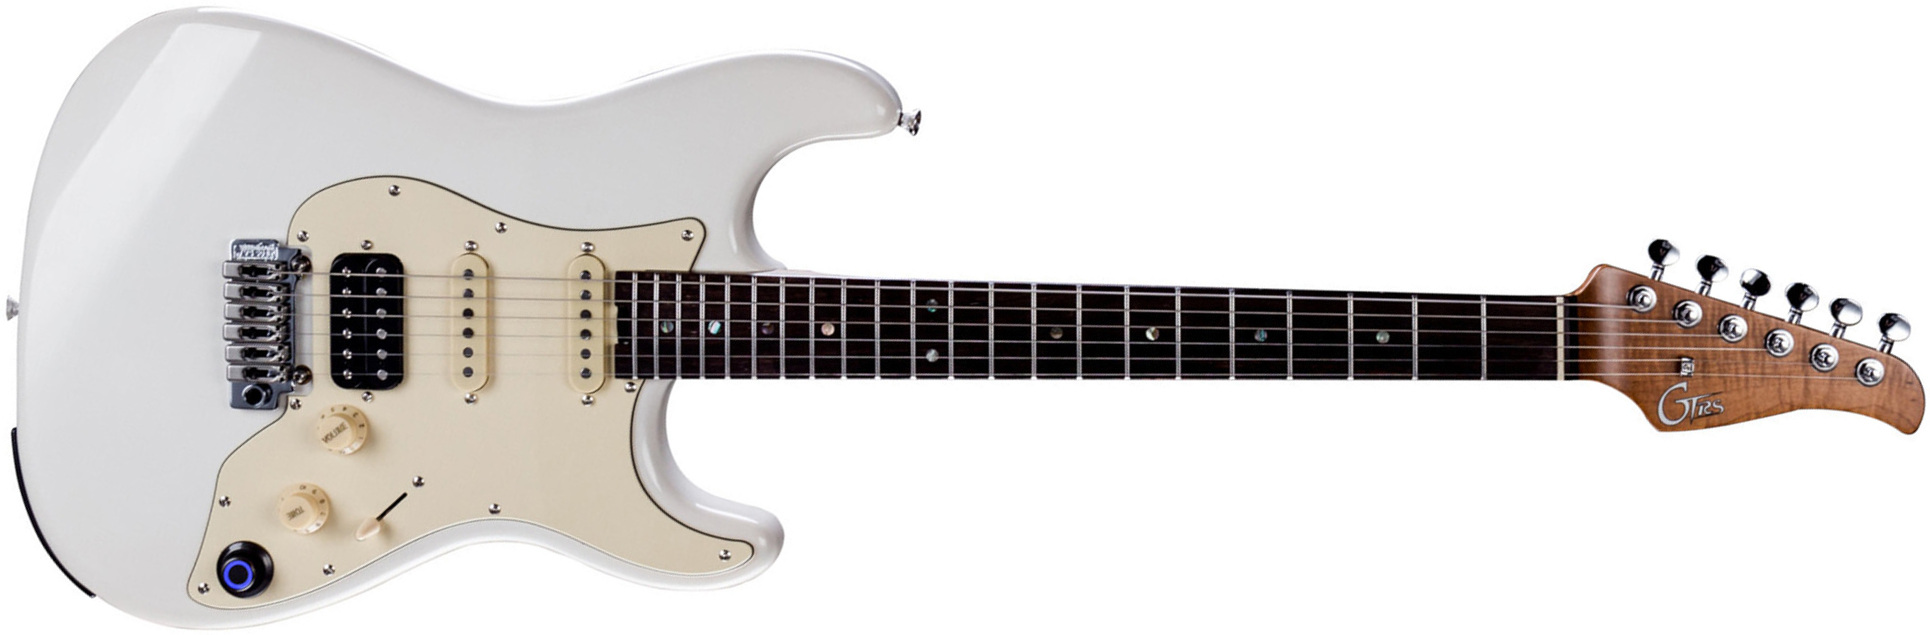 Mooer Gtrs P800 Pro Intelligent Guitar Hss Trem Rw - Olympic White - Modeling guitar - Main picture